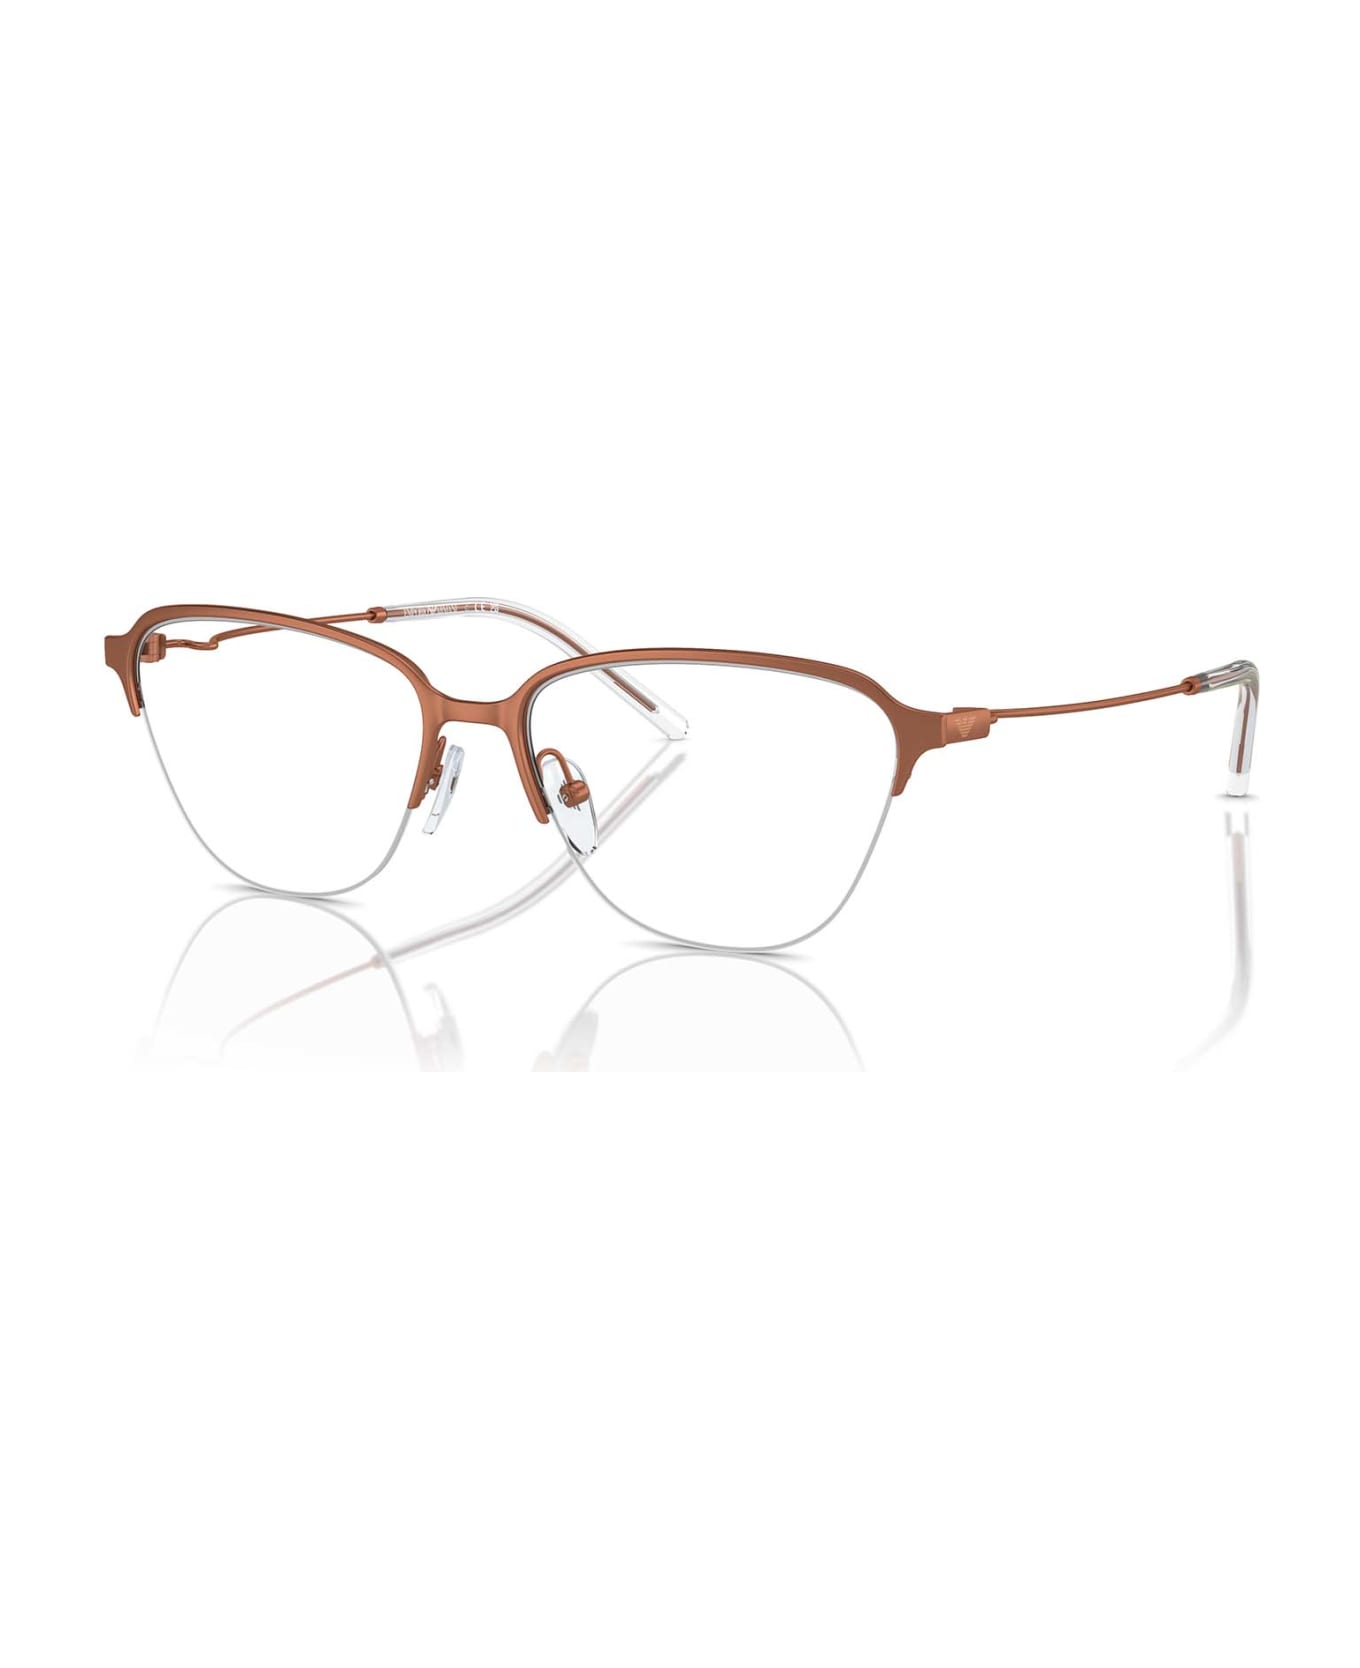 Emporio Armani Ea1161 Shiny Brown Glasses - Shiny Brown